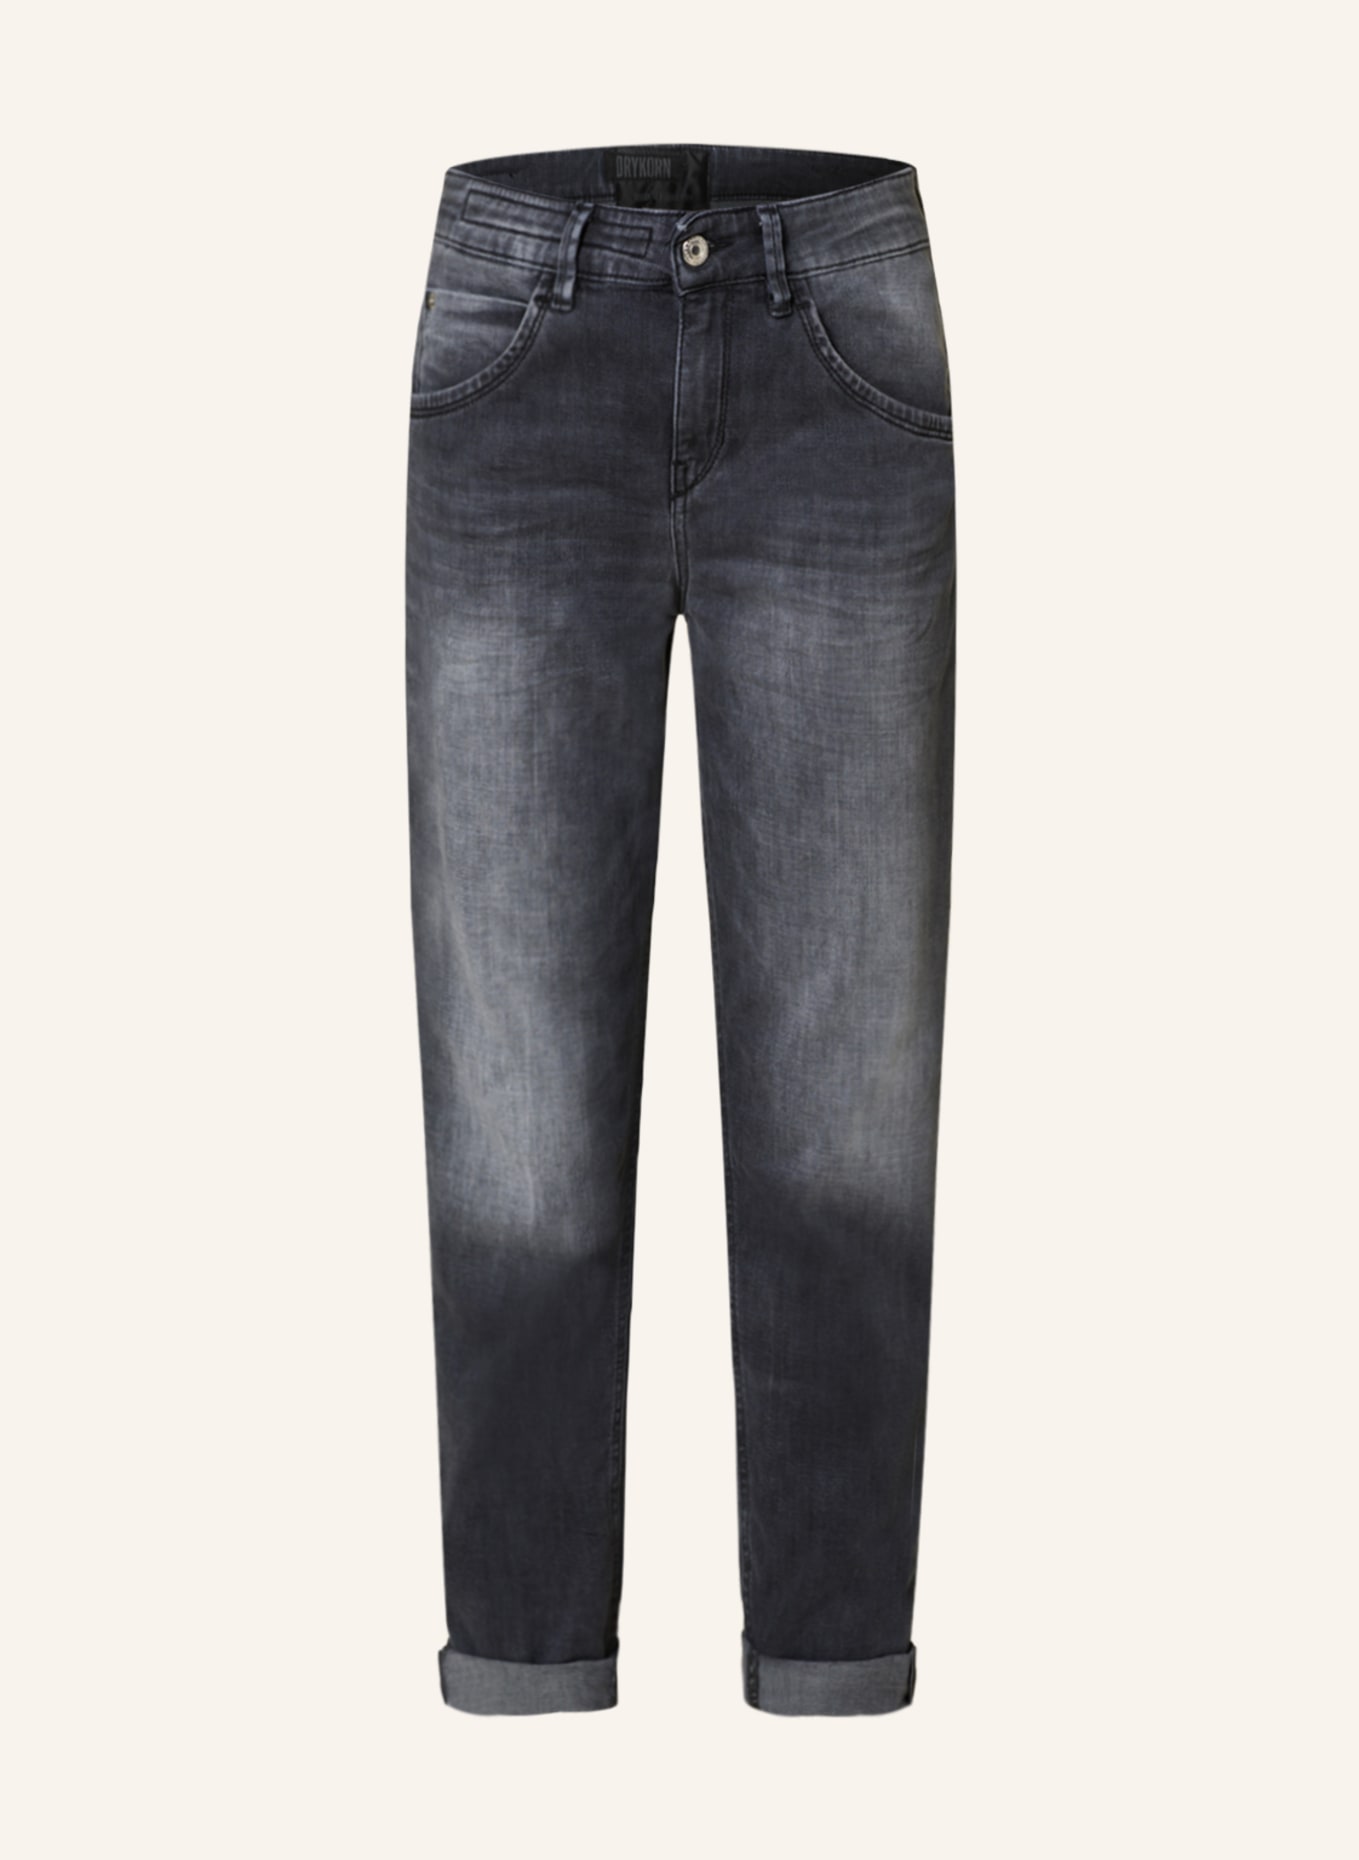 DRYKORN Jeans LIKE, Farbe: 6350 grau (Bild 1)